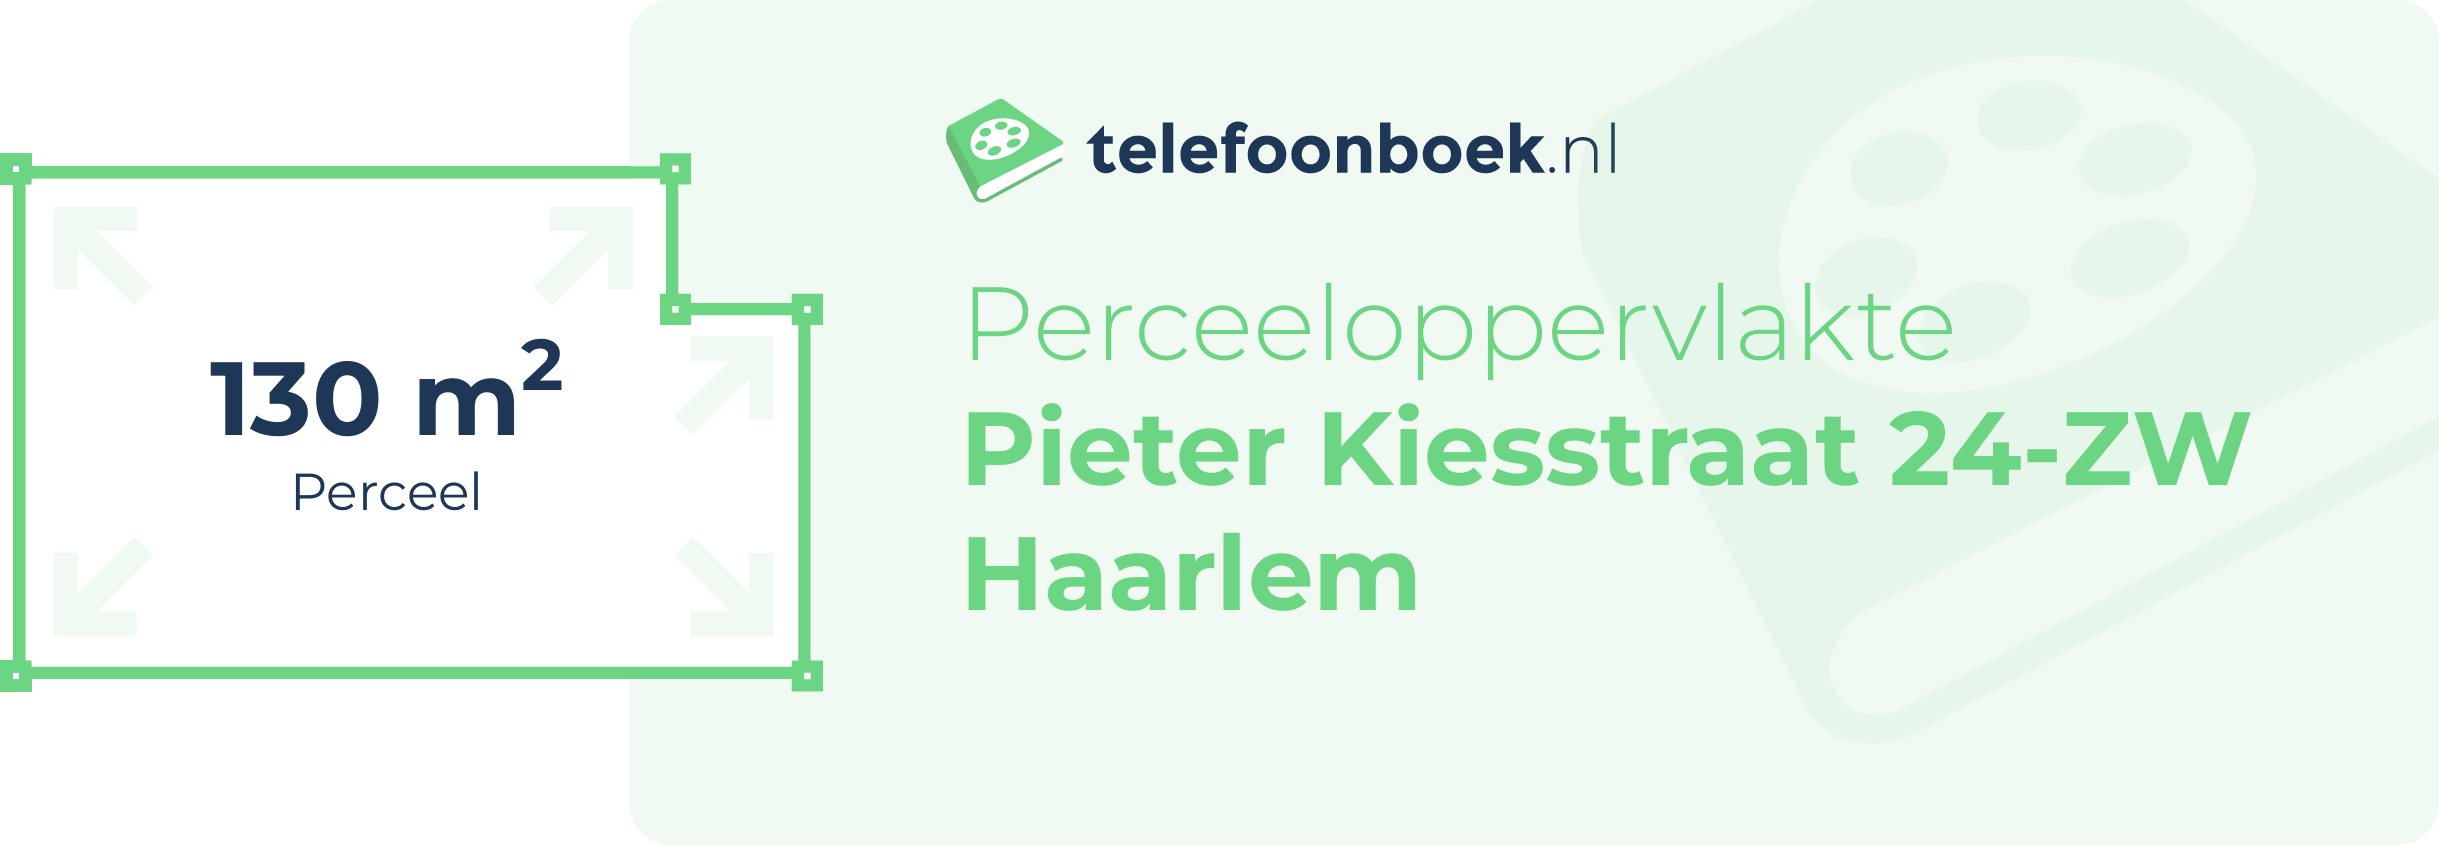 Perceeloppervlakte Pieter Kiesstraat 24-ZW Haarlem